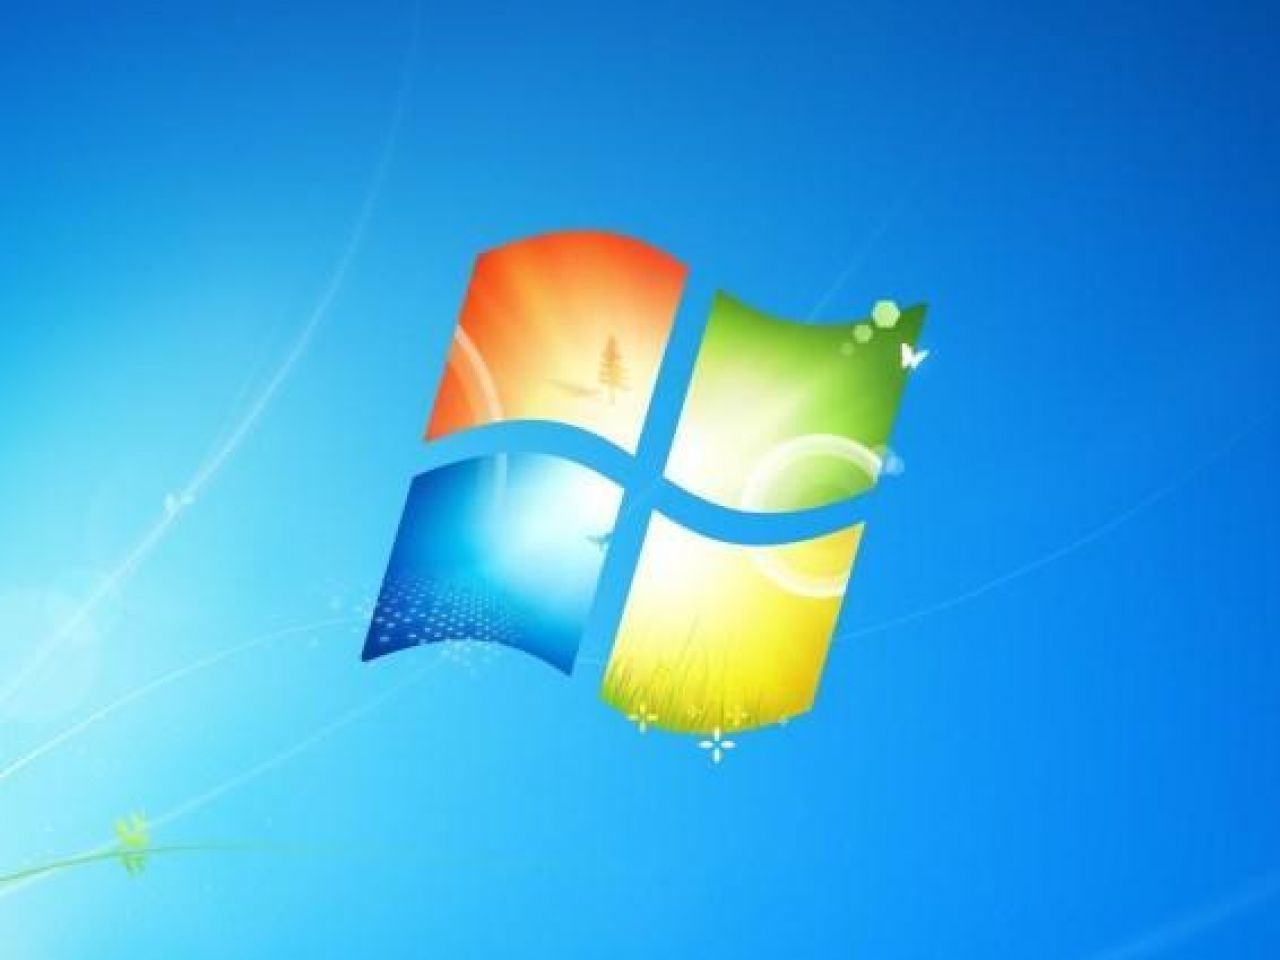 「Windows 7」と「Windows Server 2008」のゼロデイ脆弱性を研究者が発見